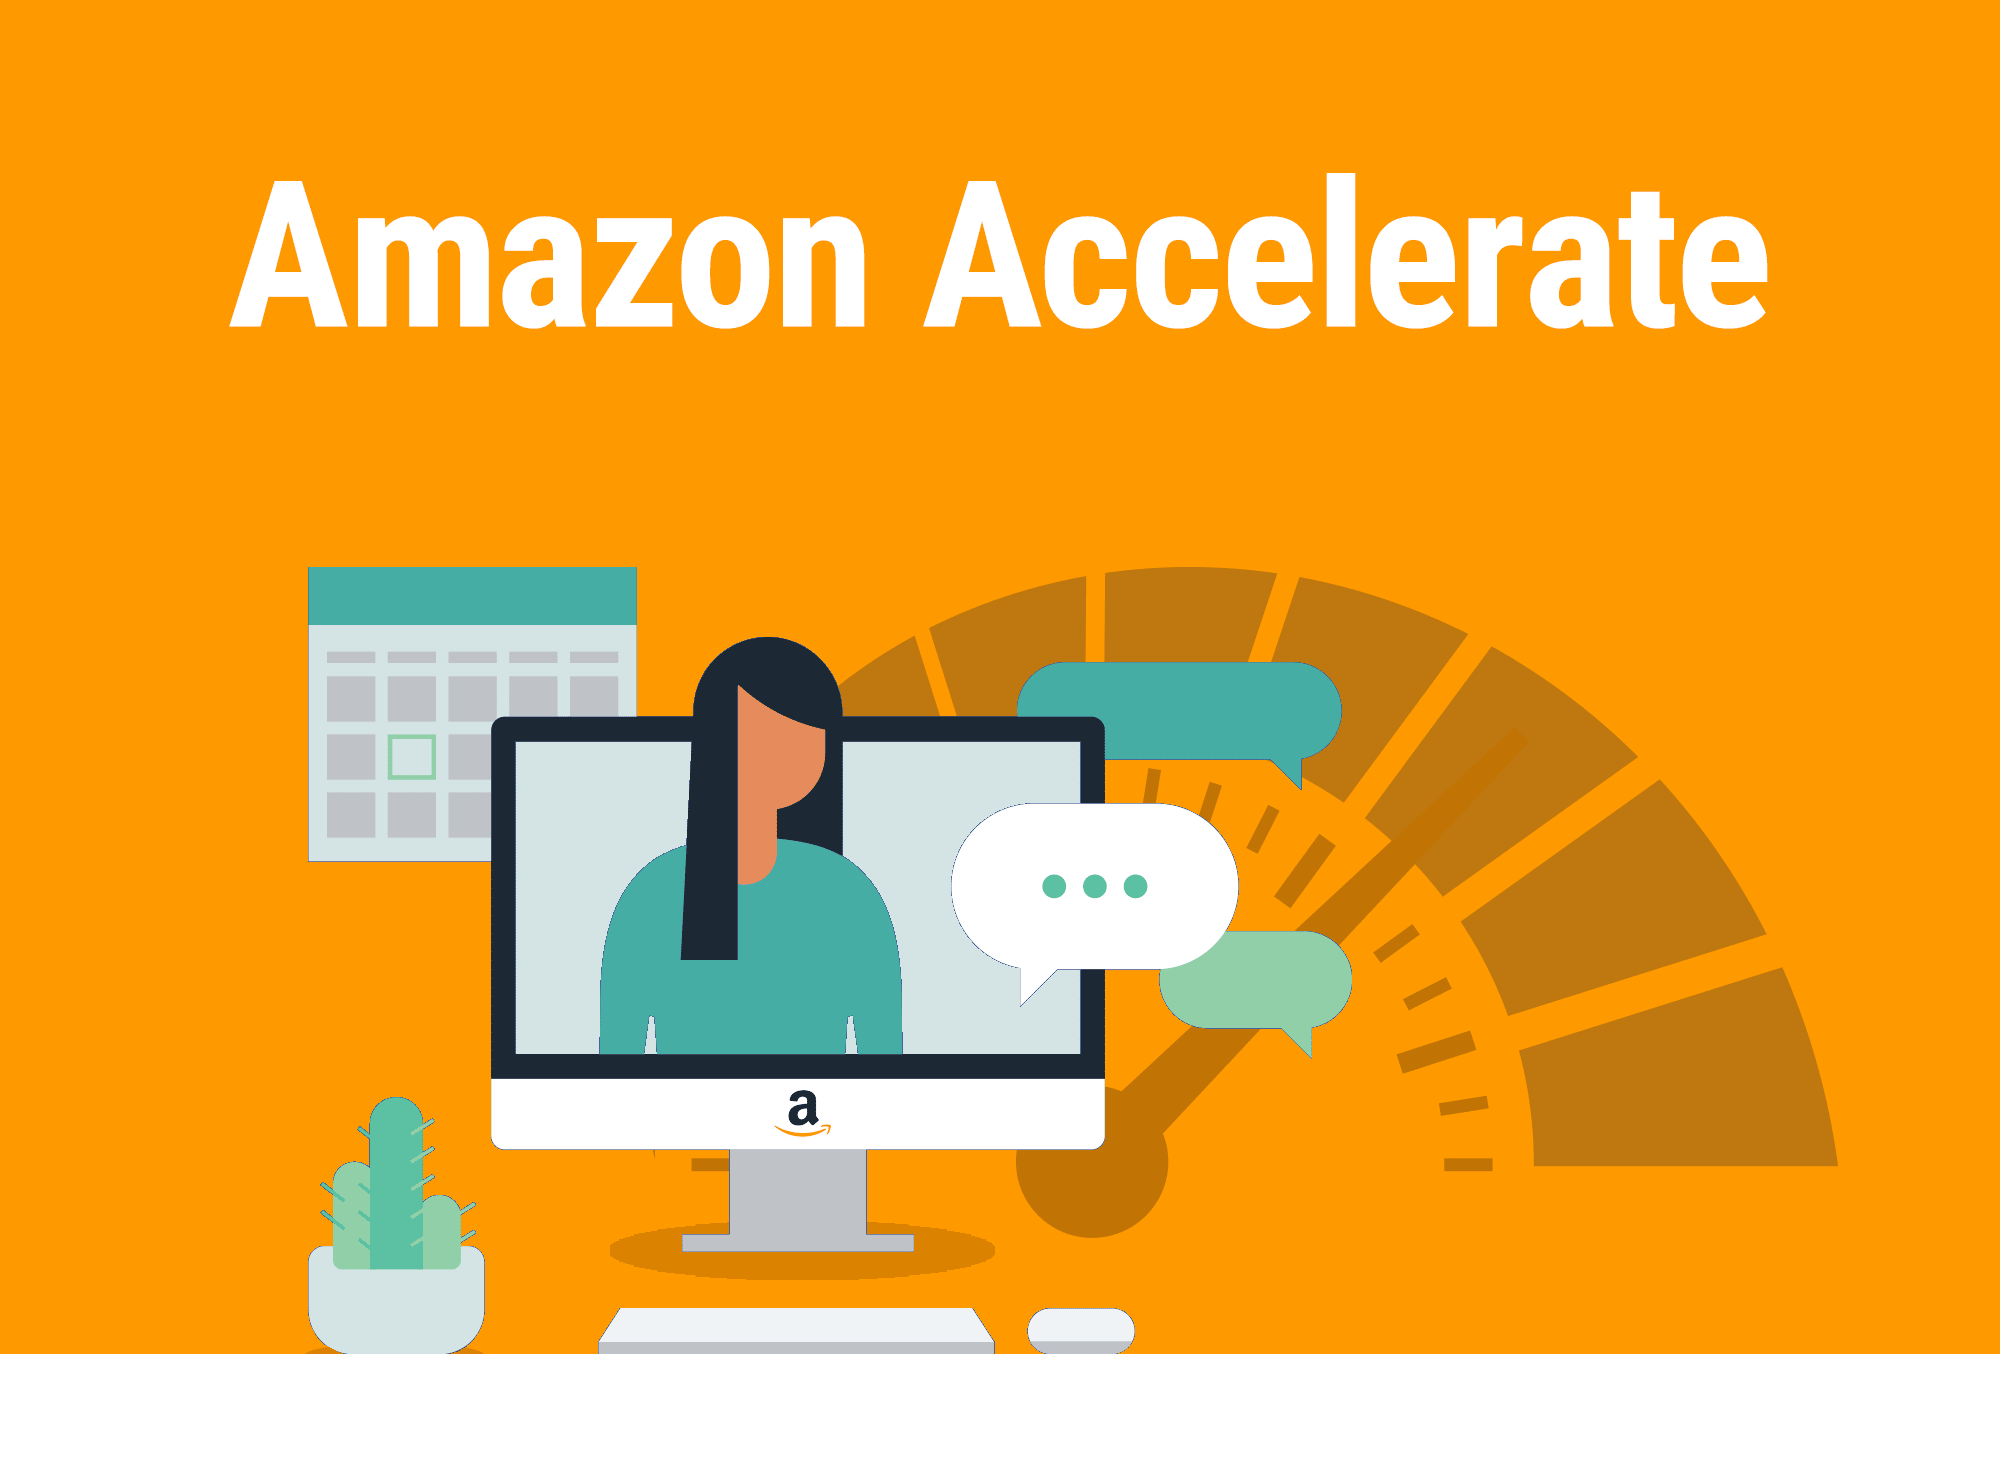 Amazon Accelerate